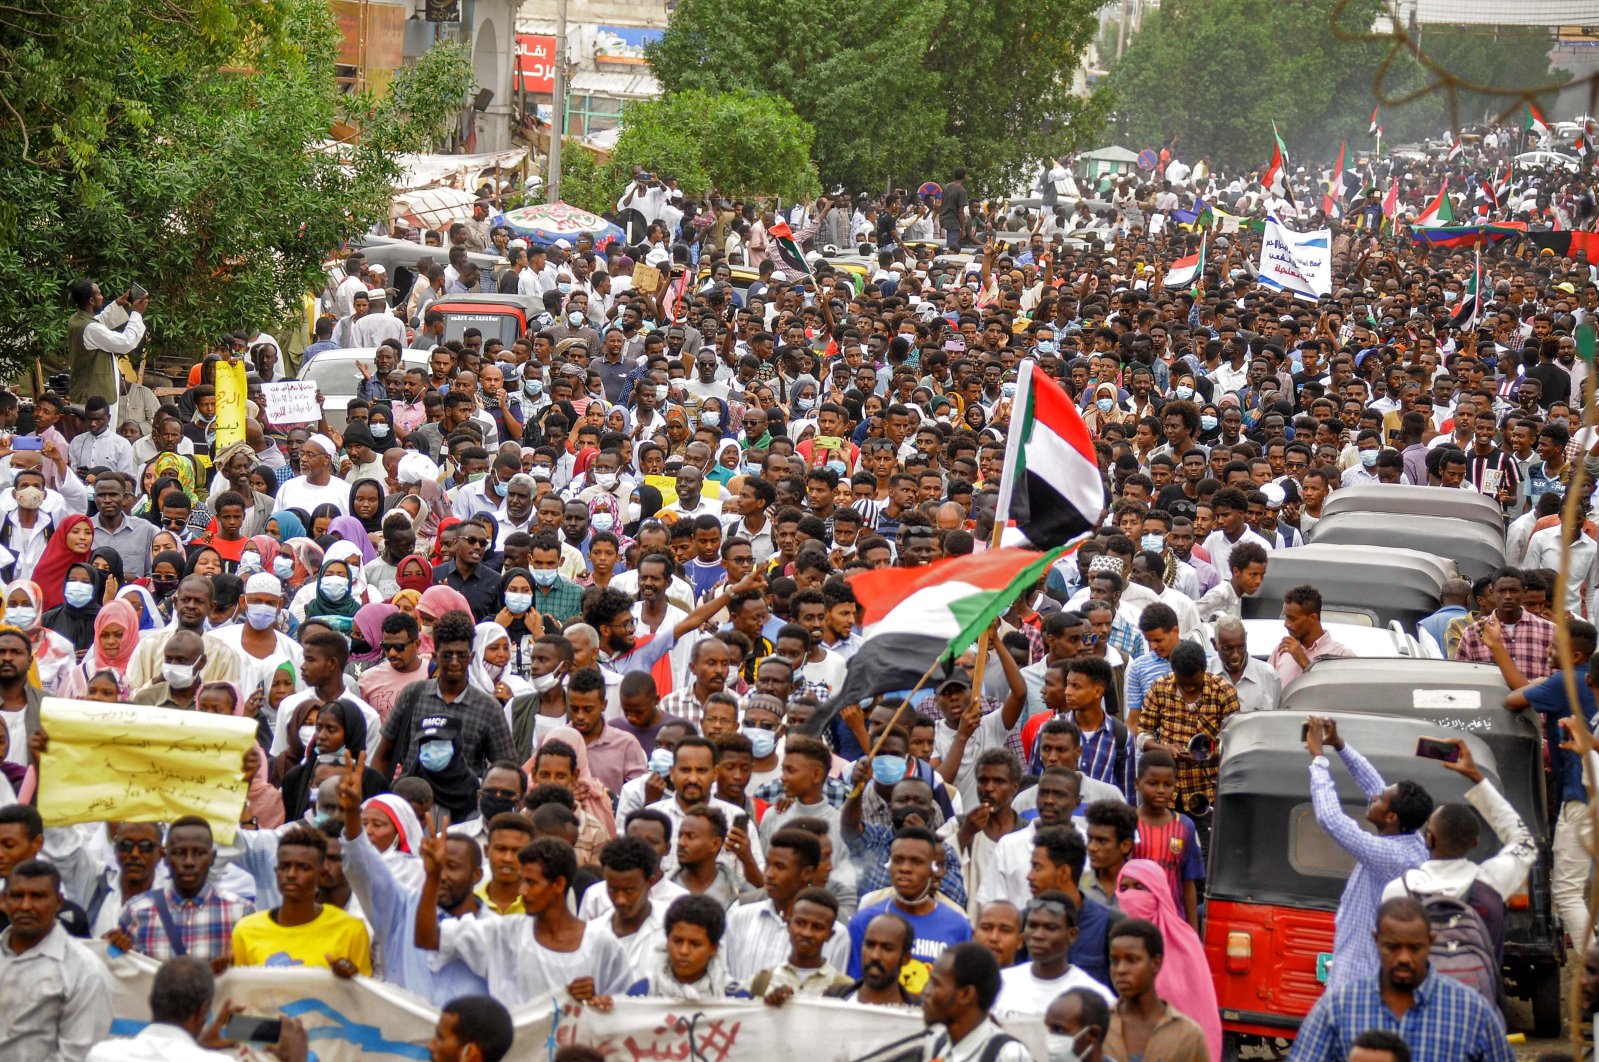 Puluhan orang memprotes kudeta di istana presiden Sudan